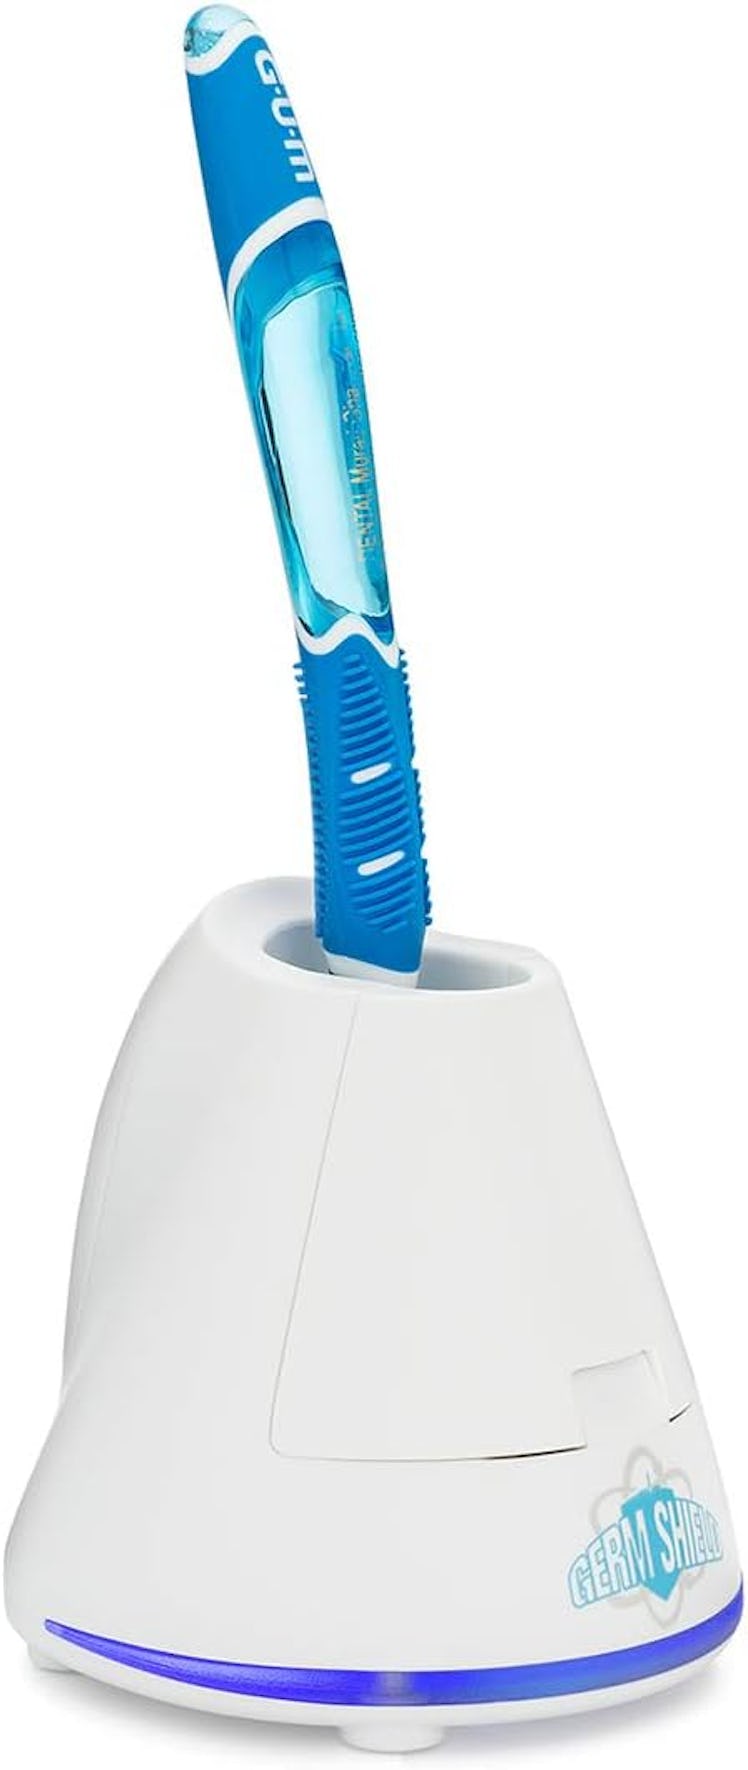 TAO Clean Germ Shield UV Toothbrush Sanitizer